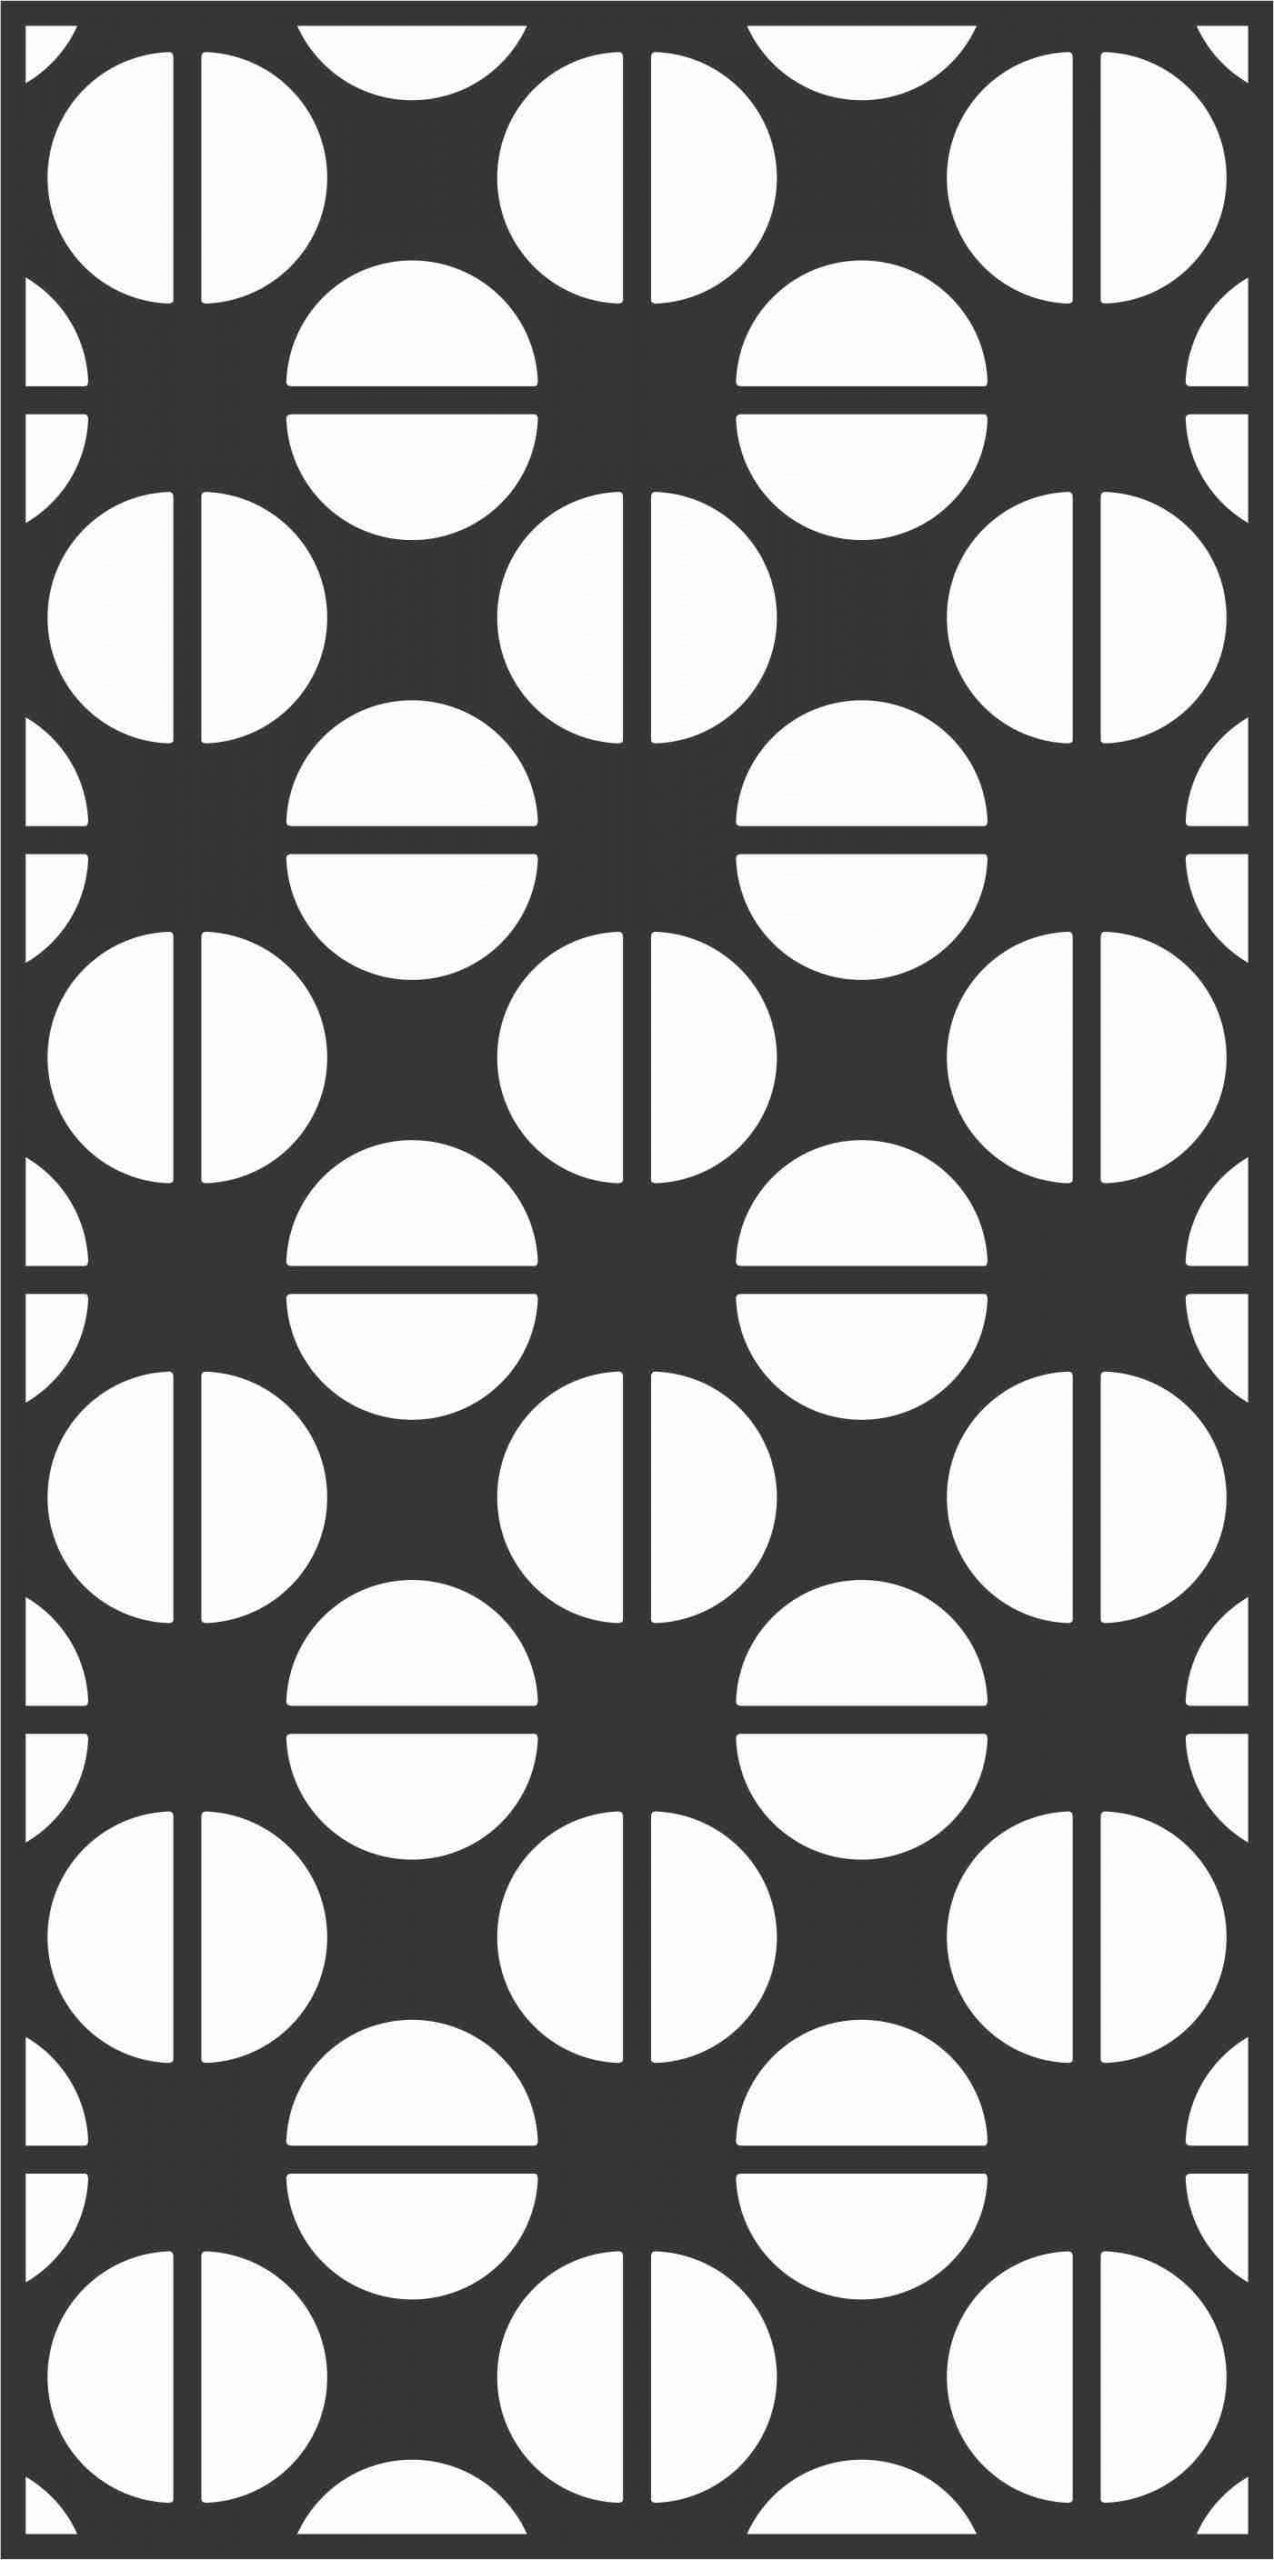 Geometrical Grill Panel Plasma Art DXF File